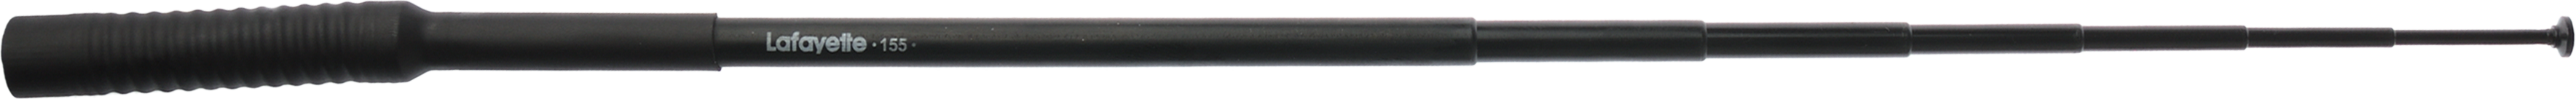 Lafayette Lafayette Rod antenna 155 MHz Black OneSize, Black